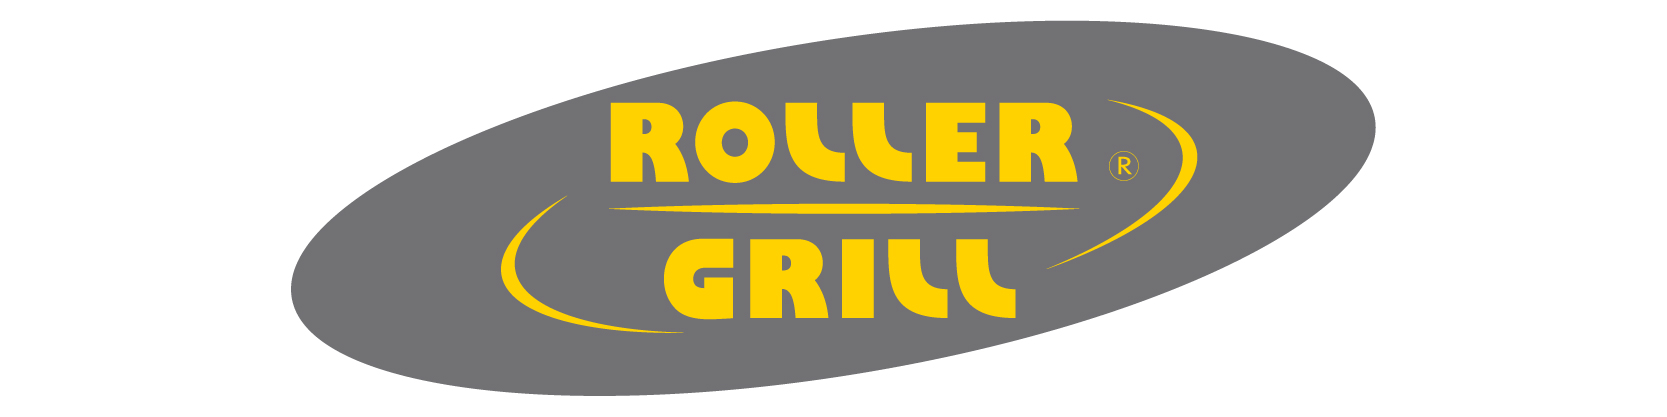 Roller Grill / France